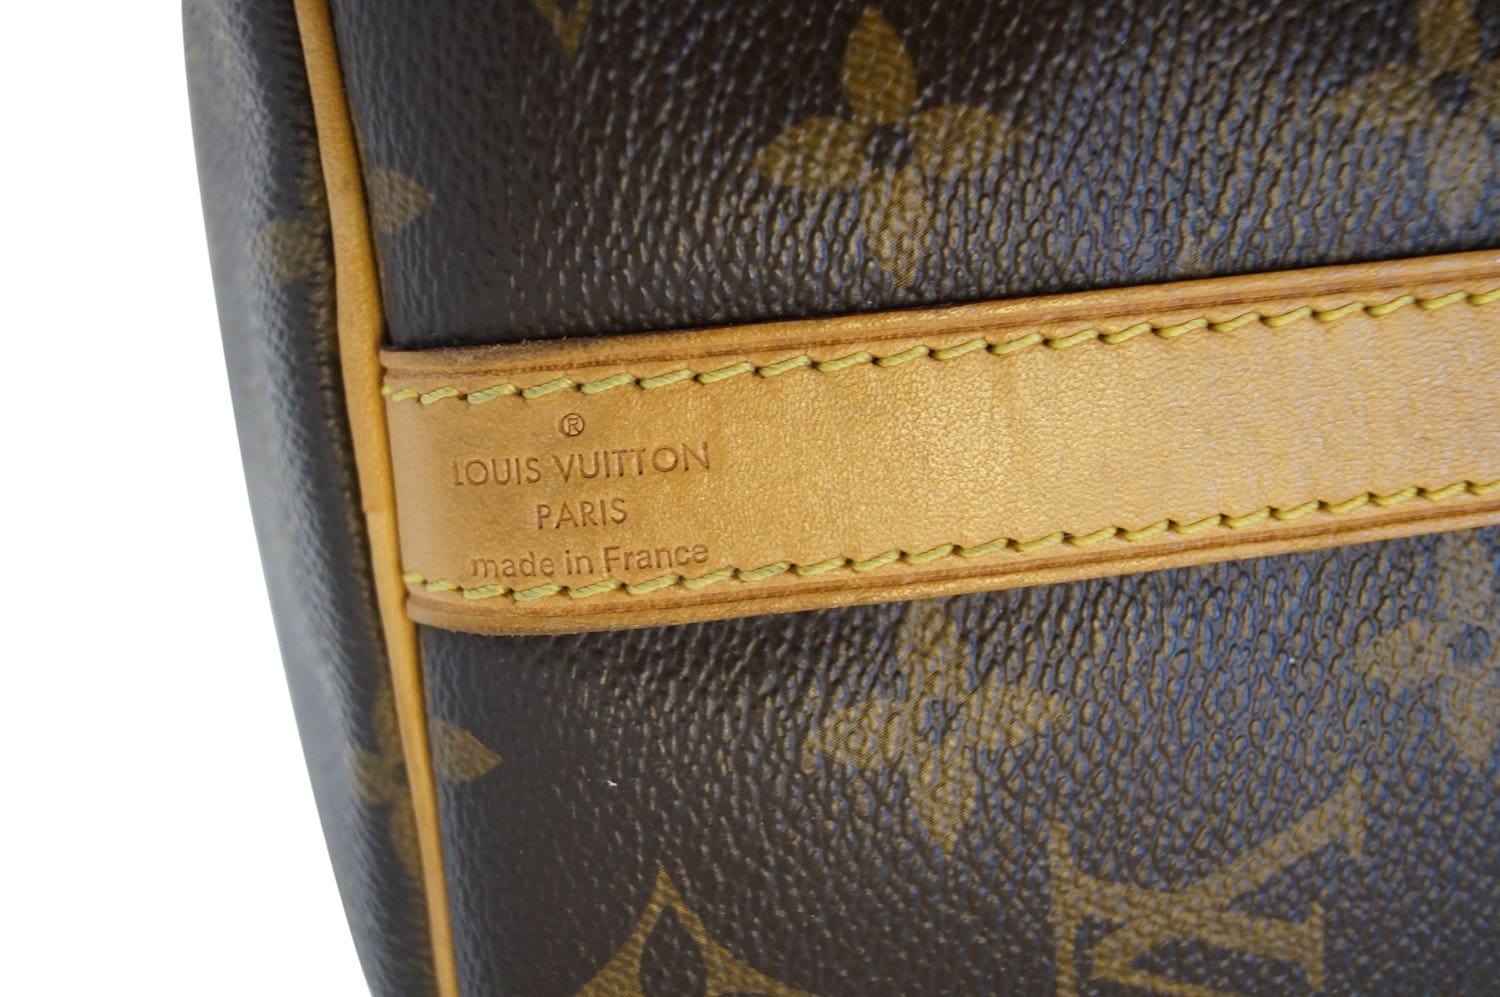 Vintage Louis Vuitton Speedy 35 Monogram Made in France 1980s